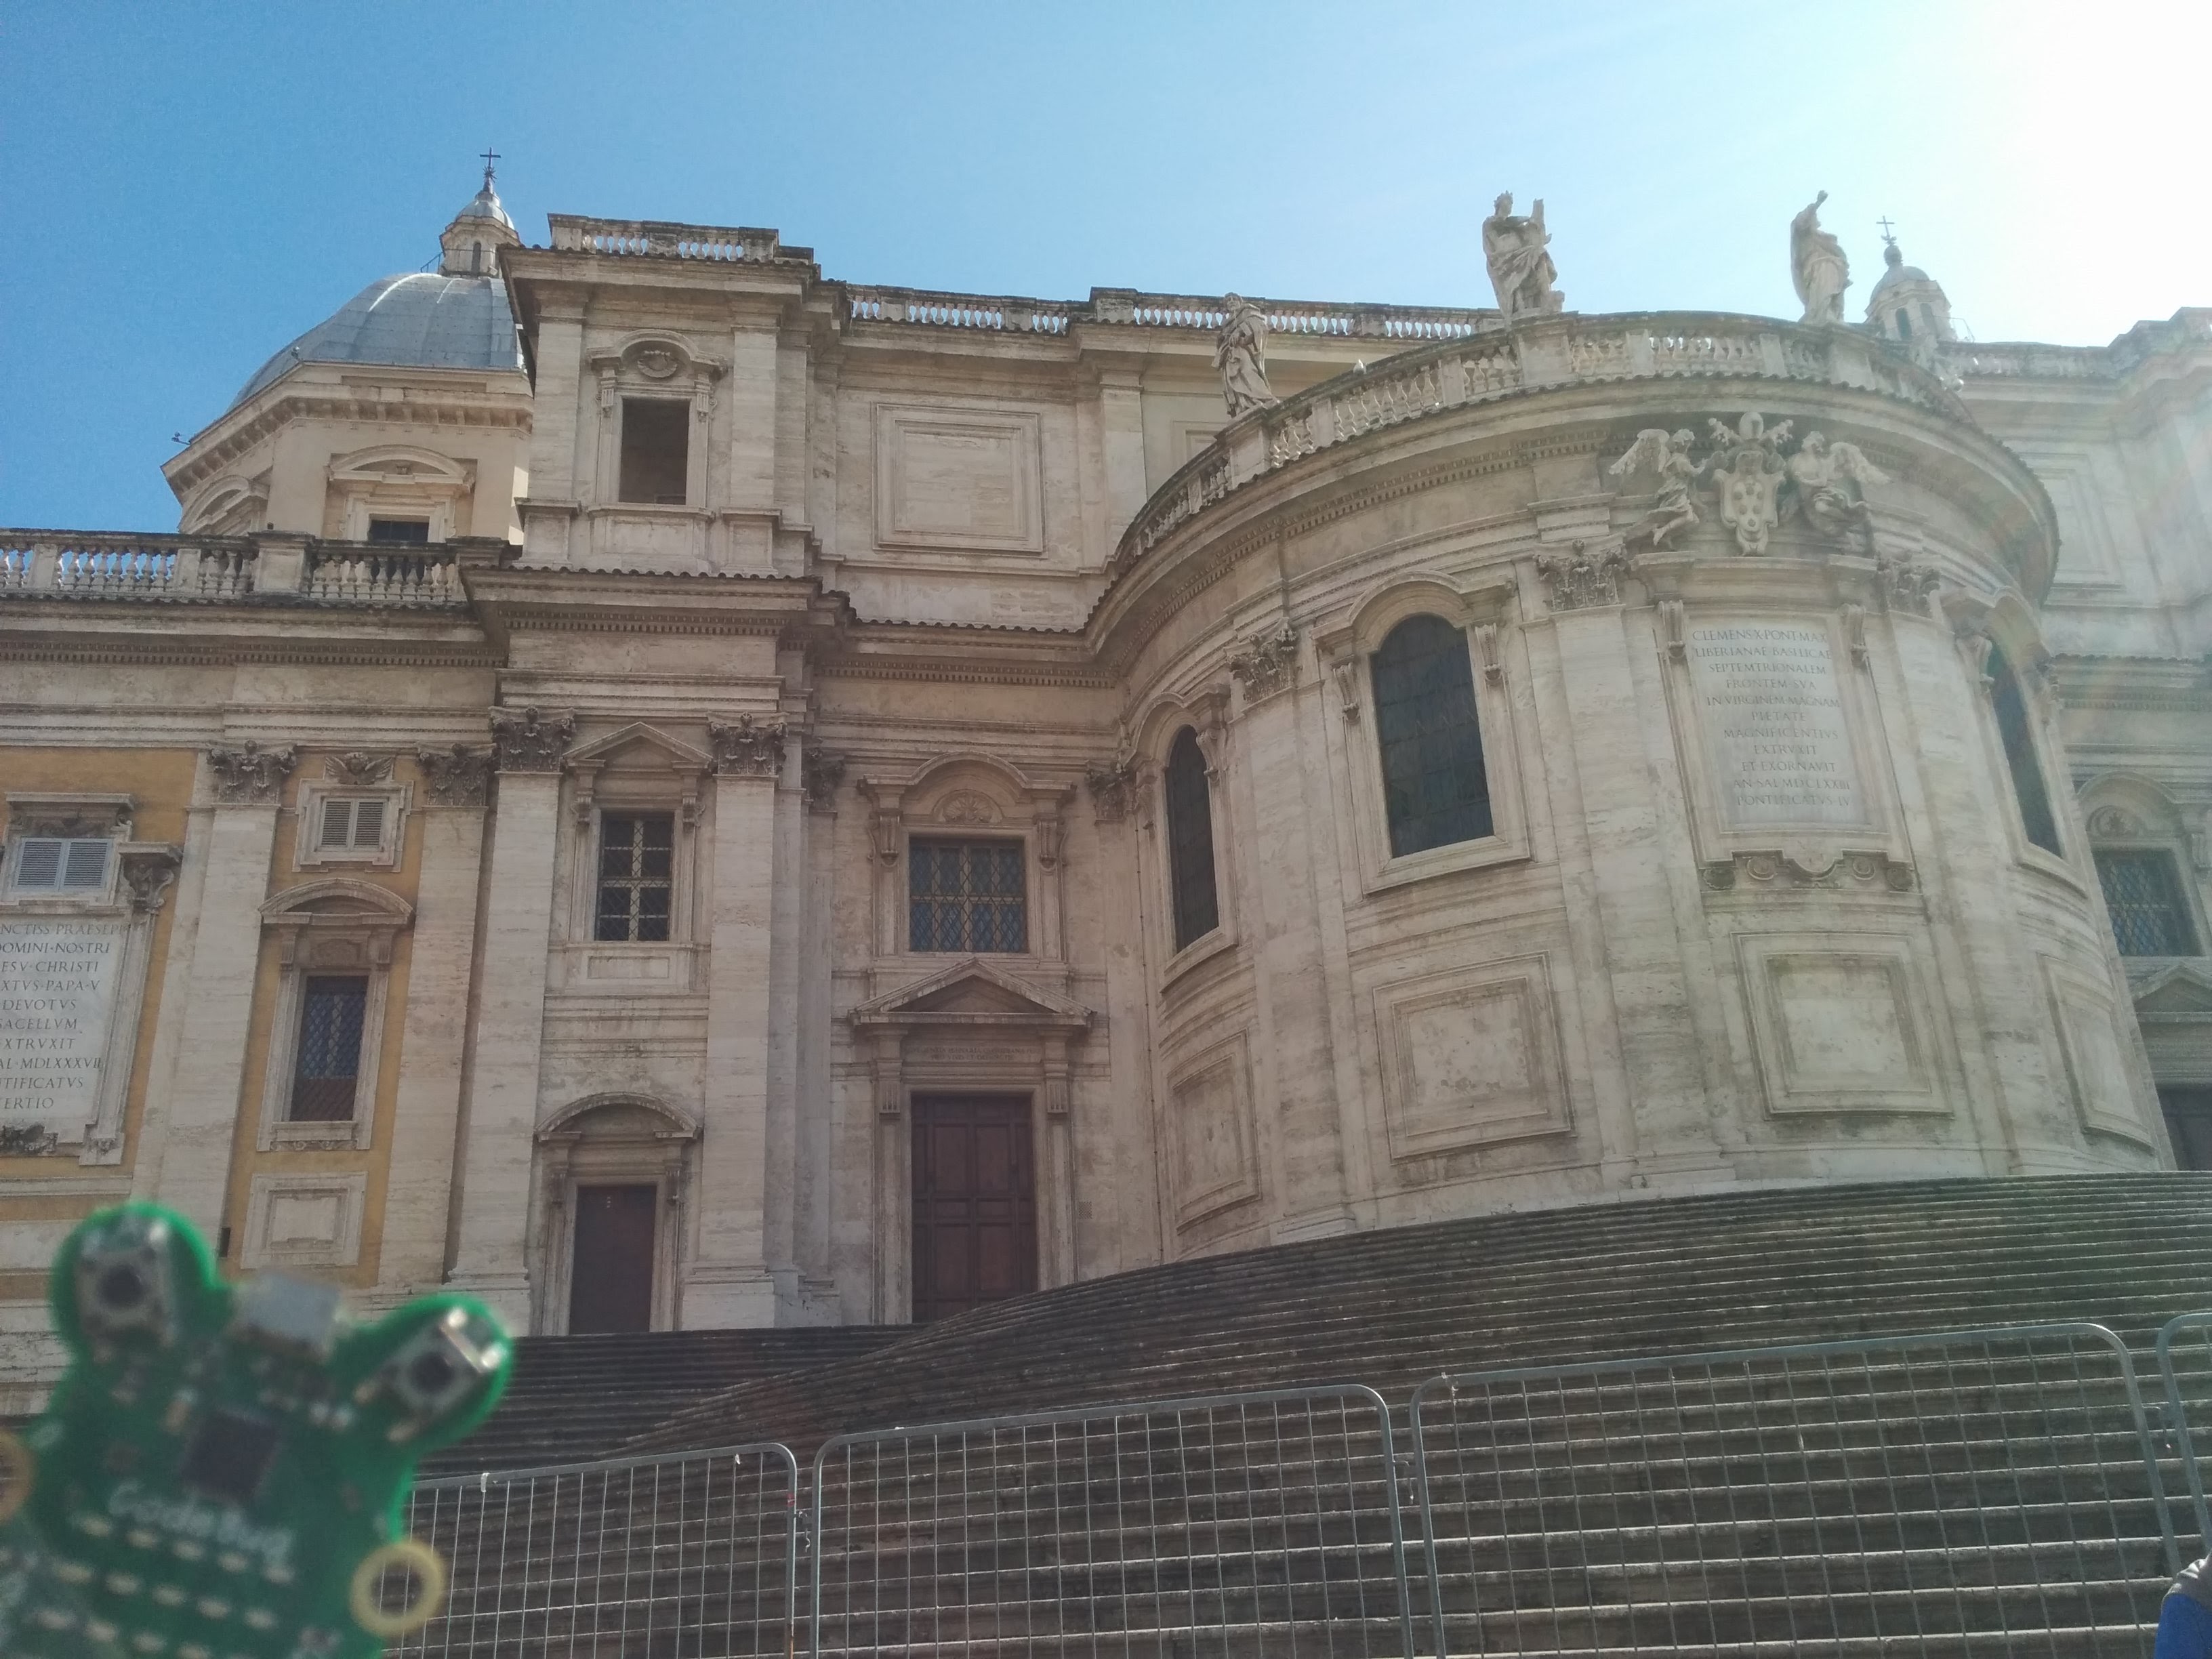 CodeBug sightseeing in Rome